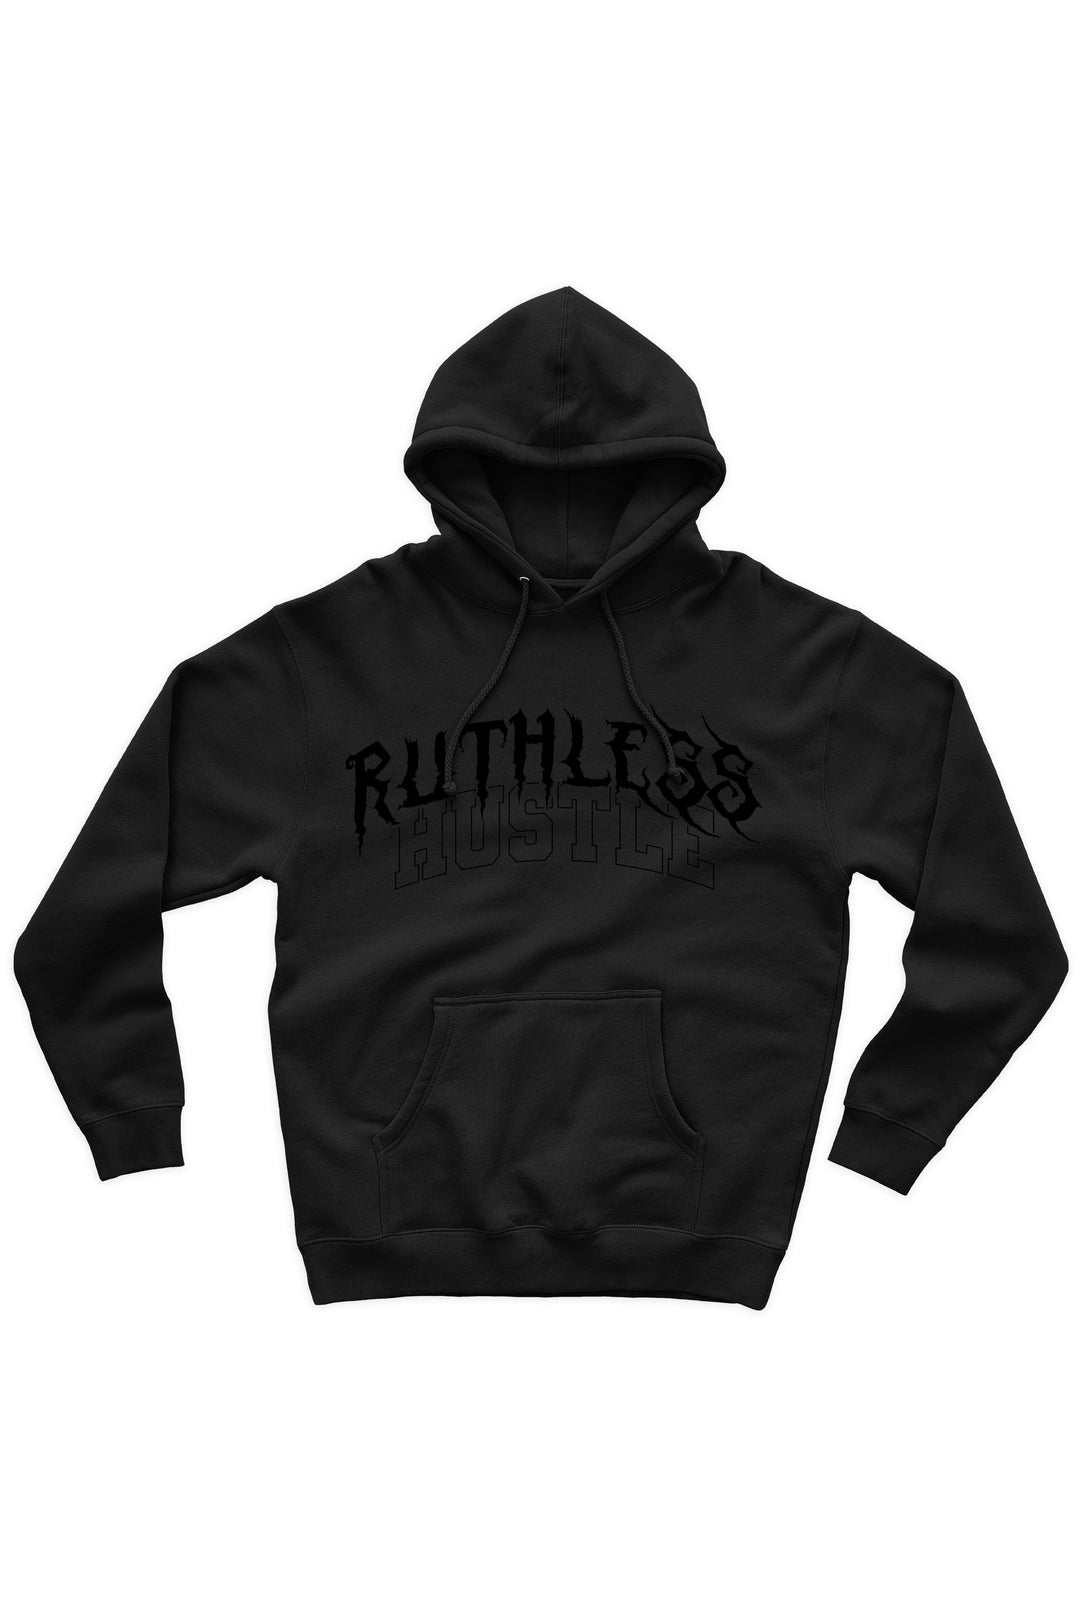 Ruthless Hustle Hoodie (Black Logo) - Zamage